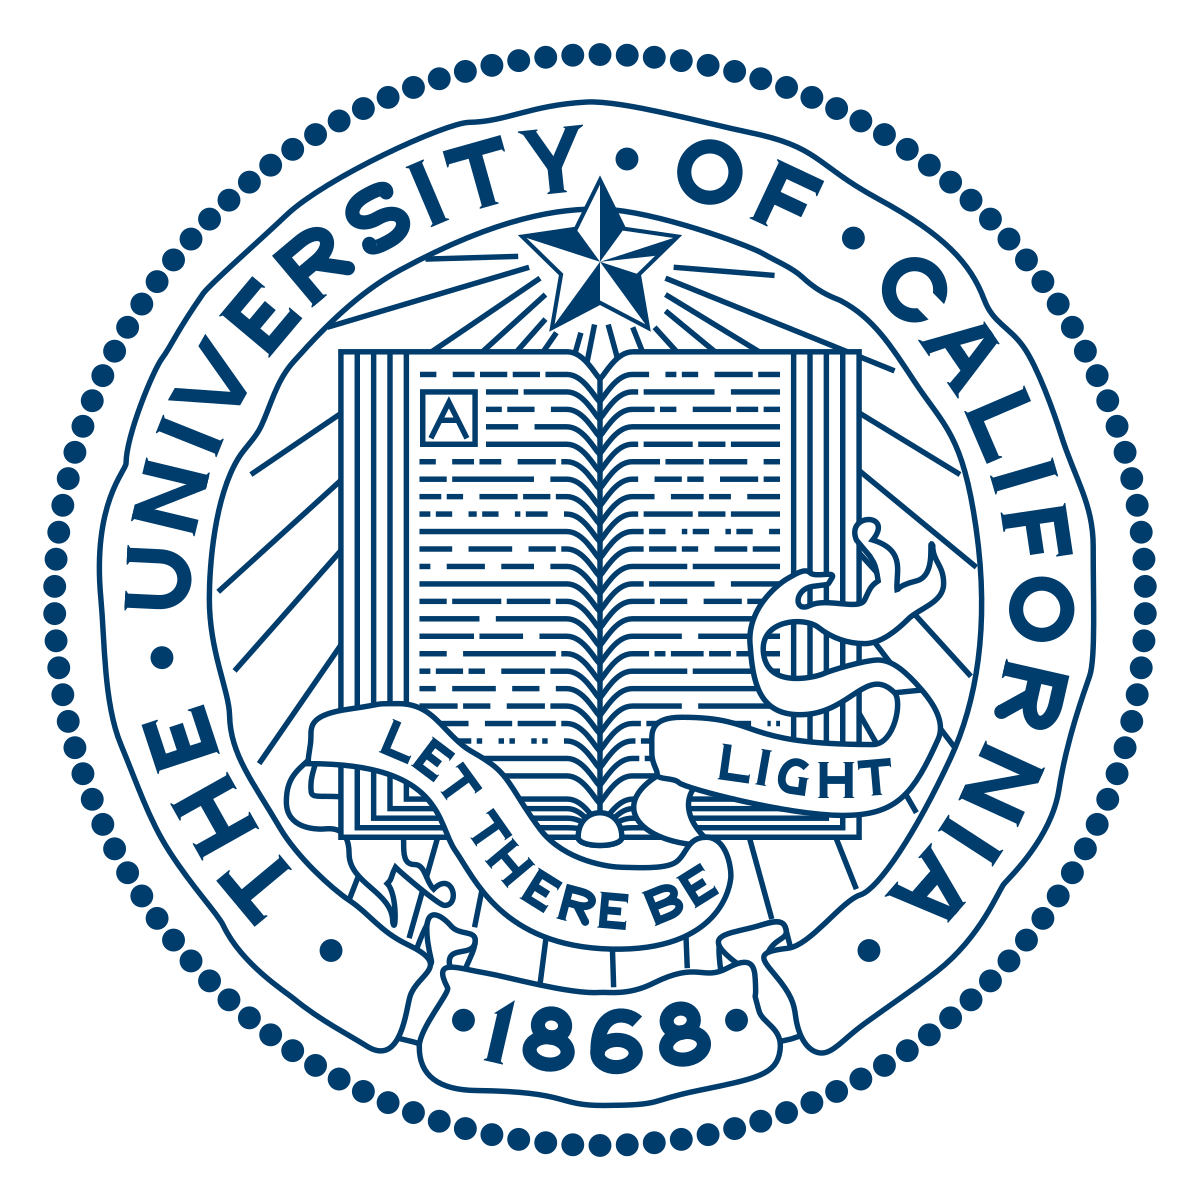 UCSC Logo - University of California, Santa Cruz